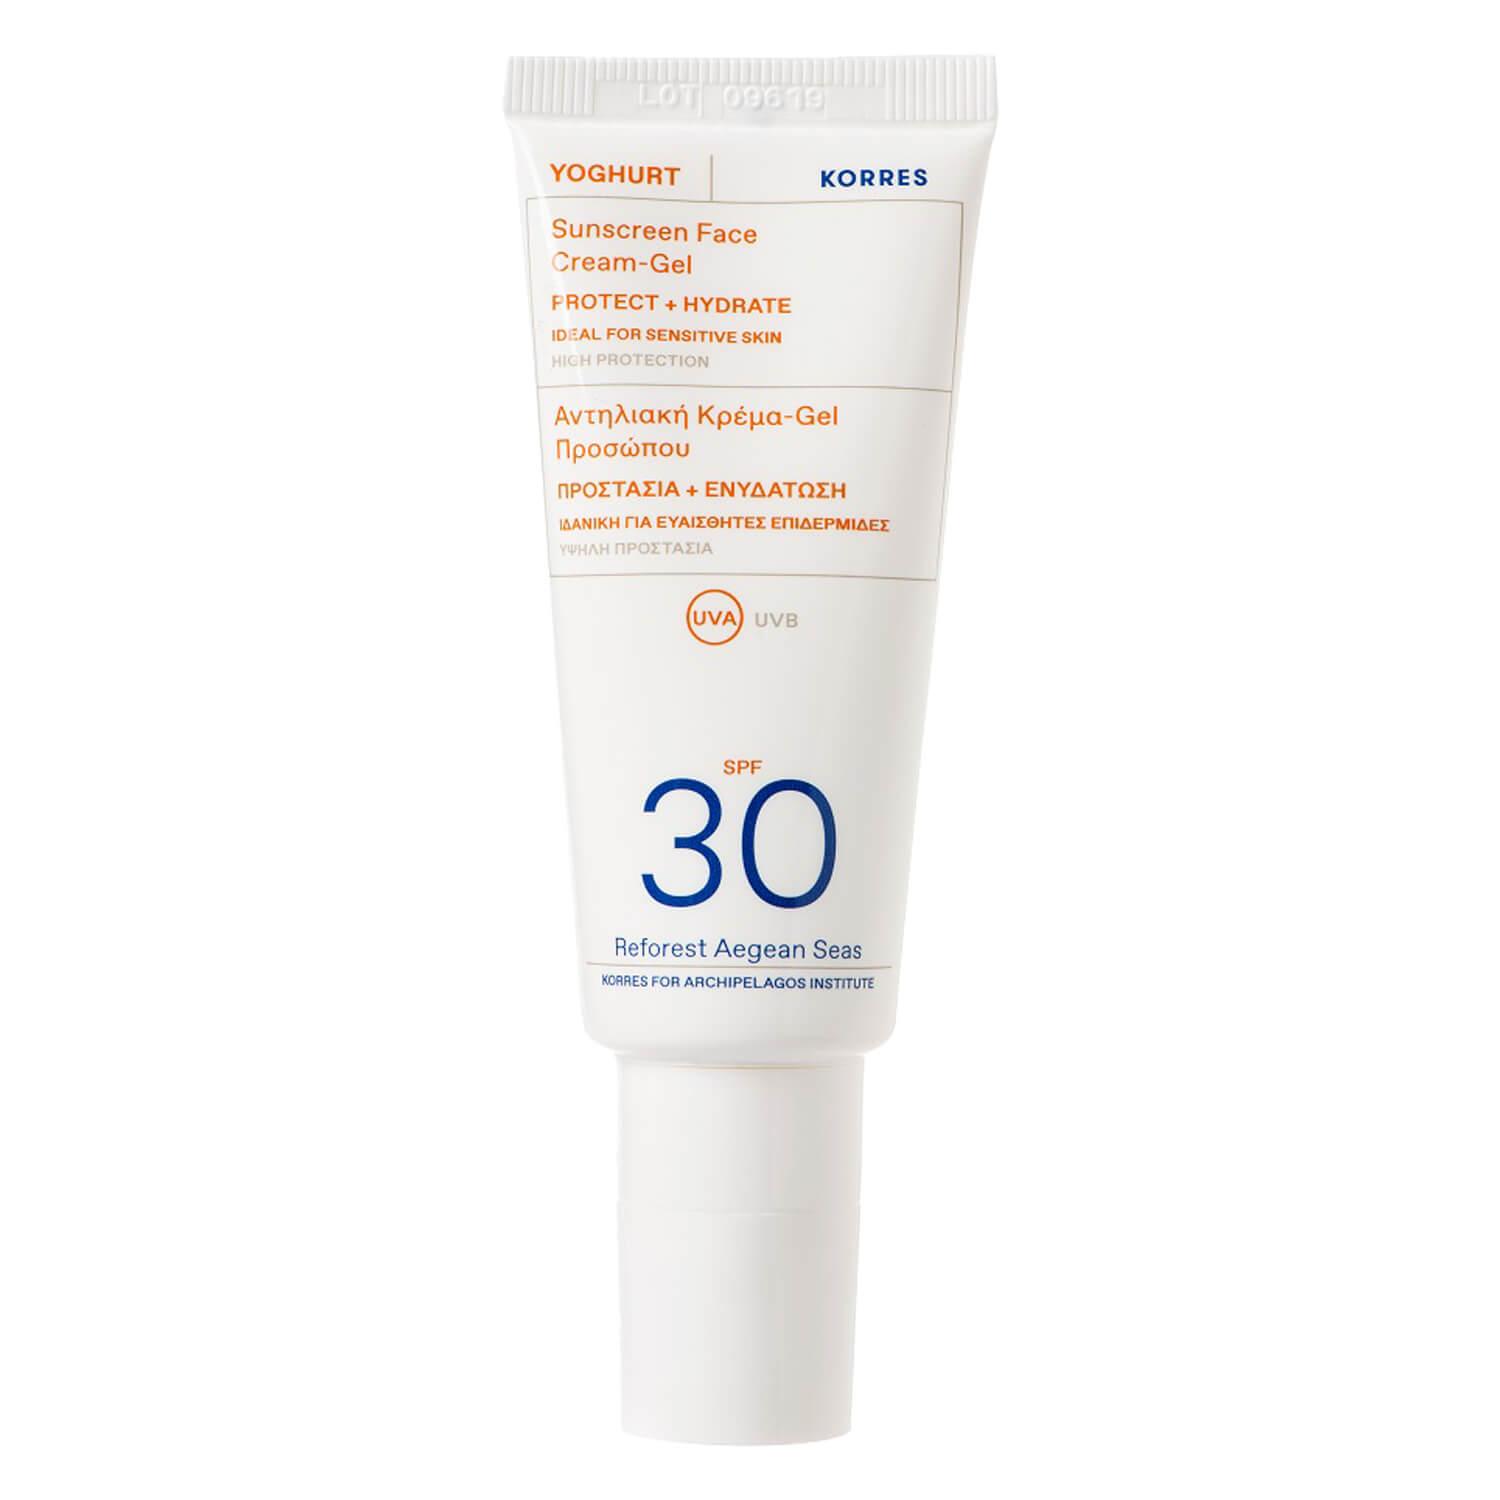 Korres Care - Yoghurt Sunscreen Face Cream-Gel SPF30